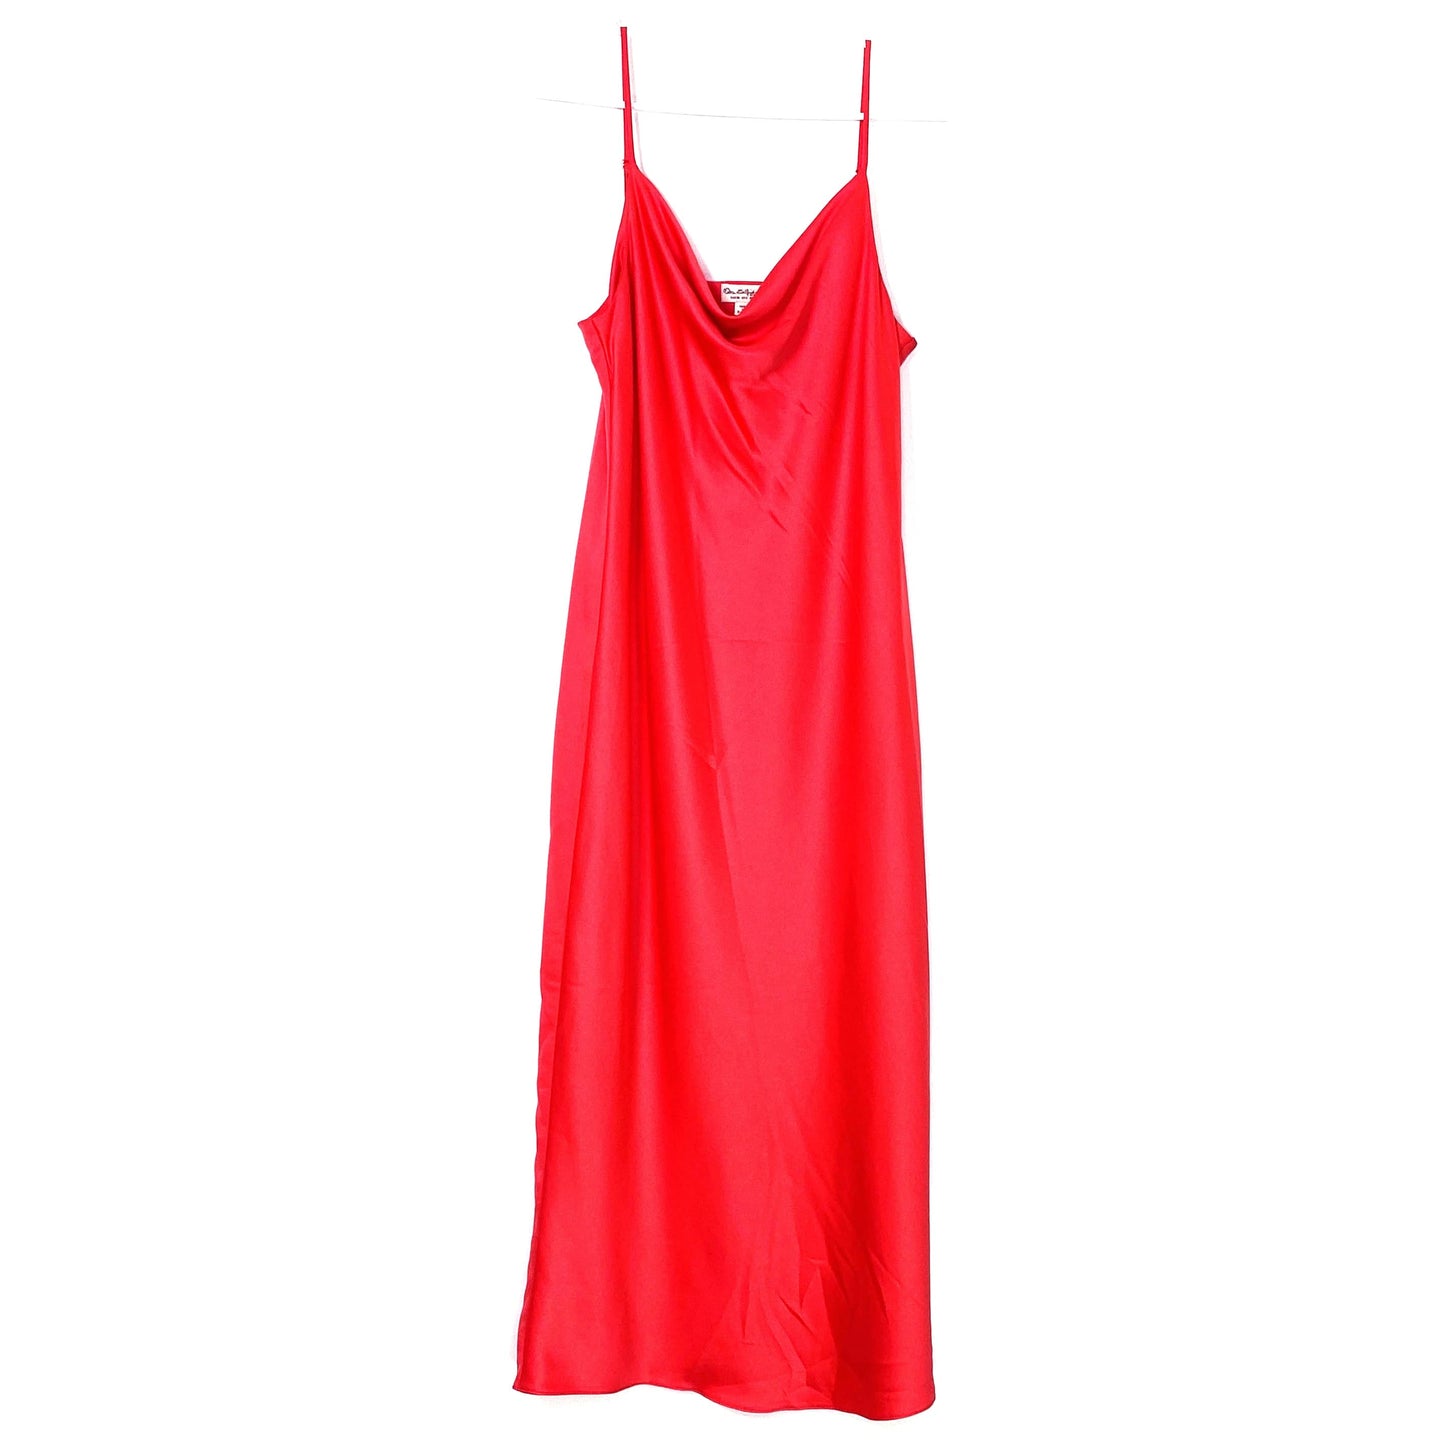 Miss Selfridge Womens Size 6 Red Slinky Dress Spaghetti Straps